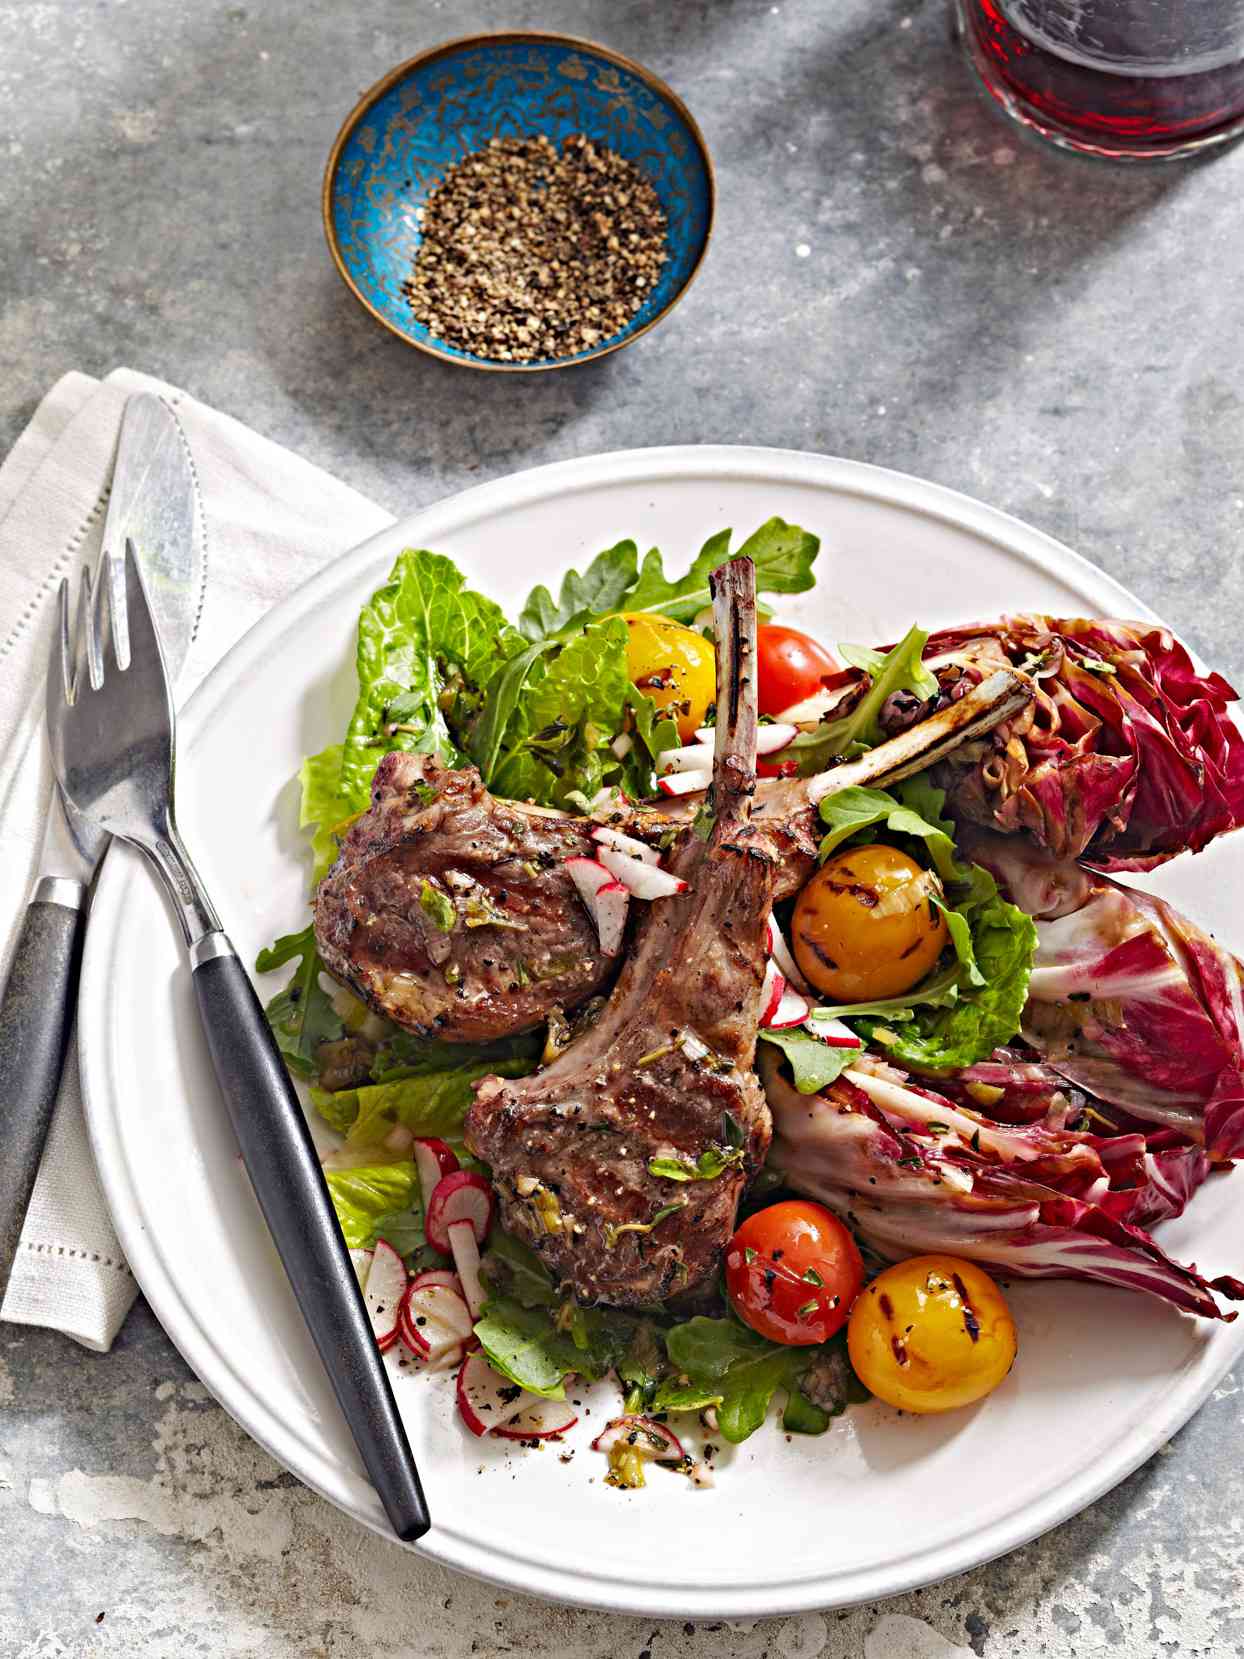 Warm Salad with Lamb Chops and Mediterranean Dressing